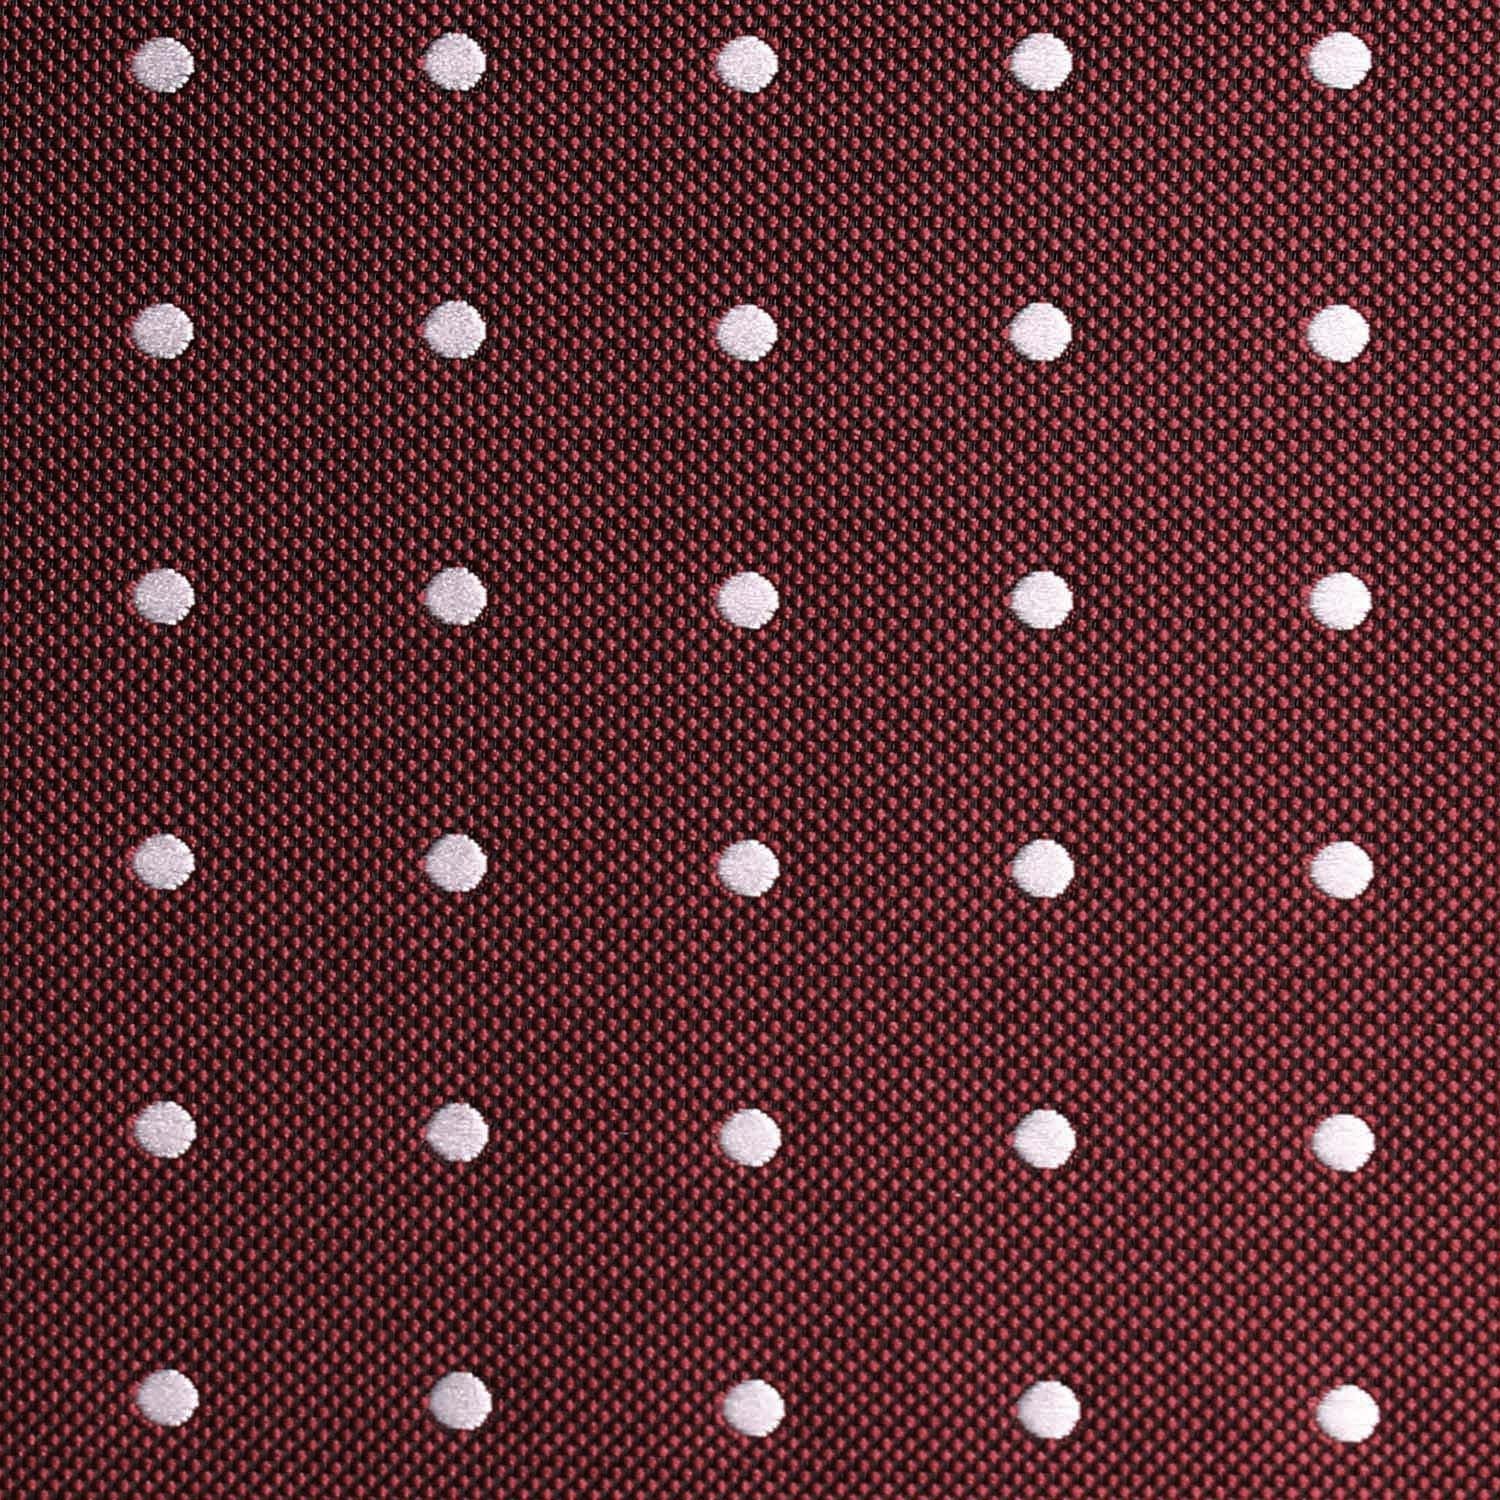 Mahogany Maroon with White Polka Dots Fabric Self Tie Bow Tie M123